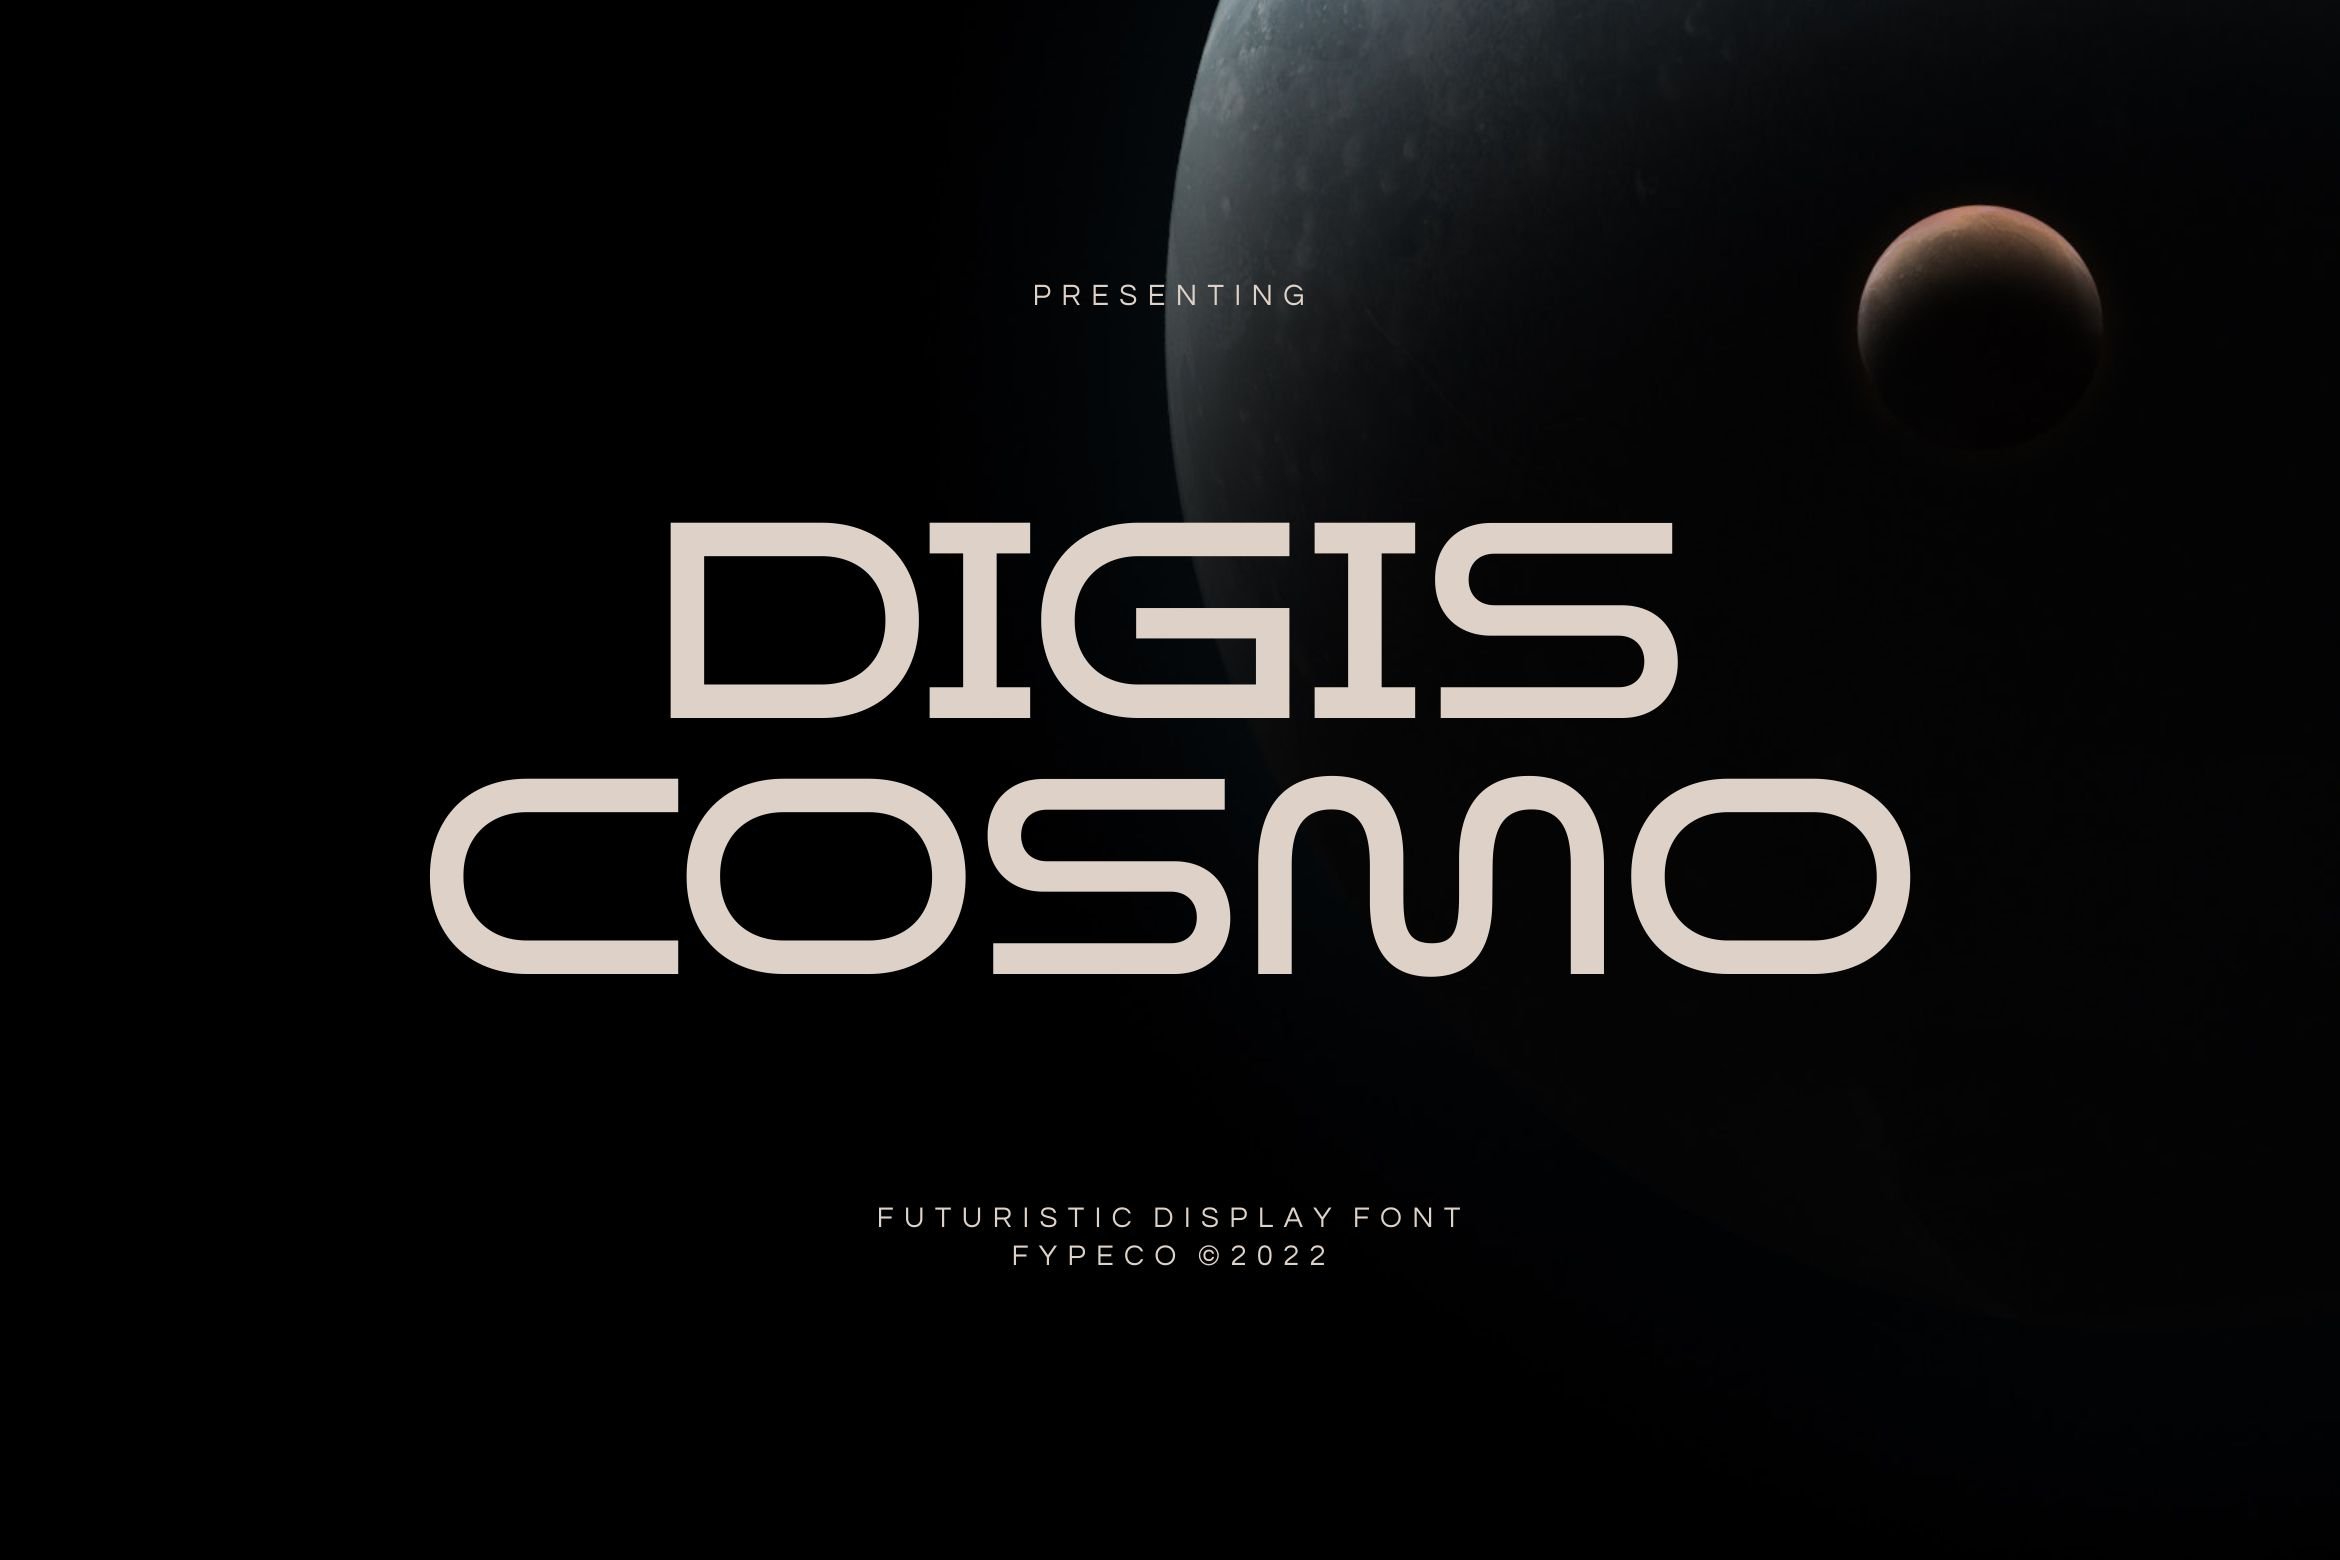 Digis Cosmo-Futuristic Display Font cover image.